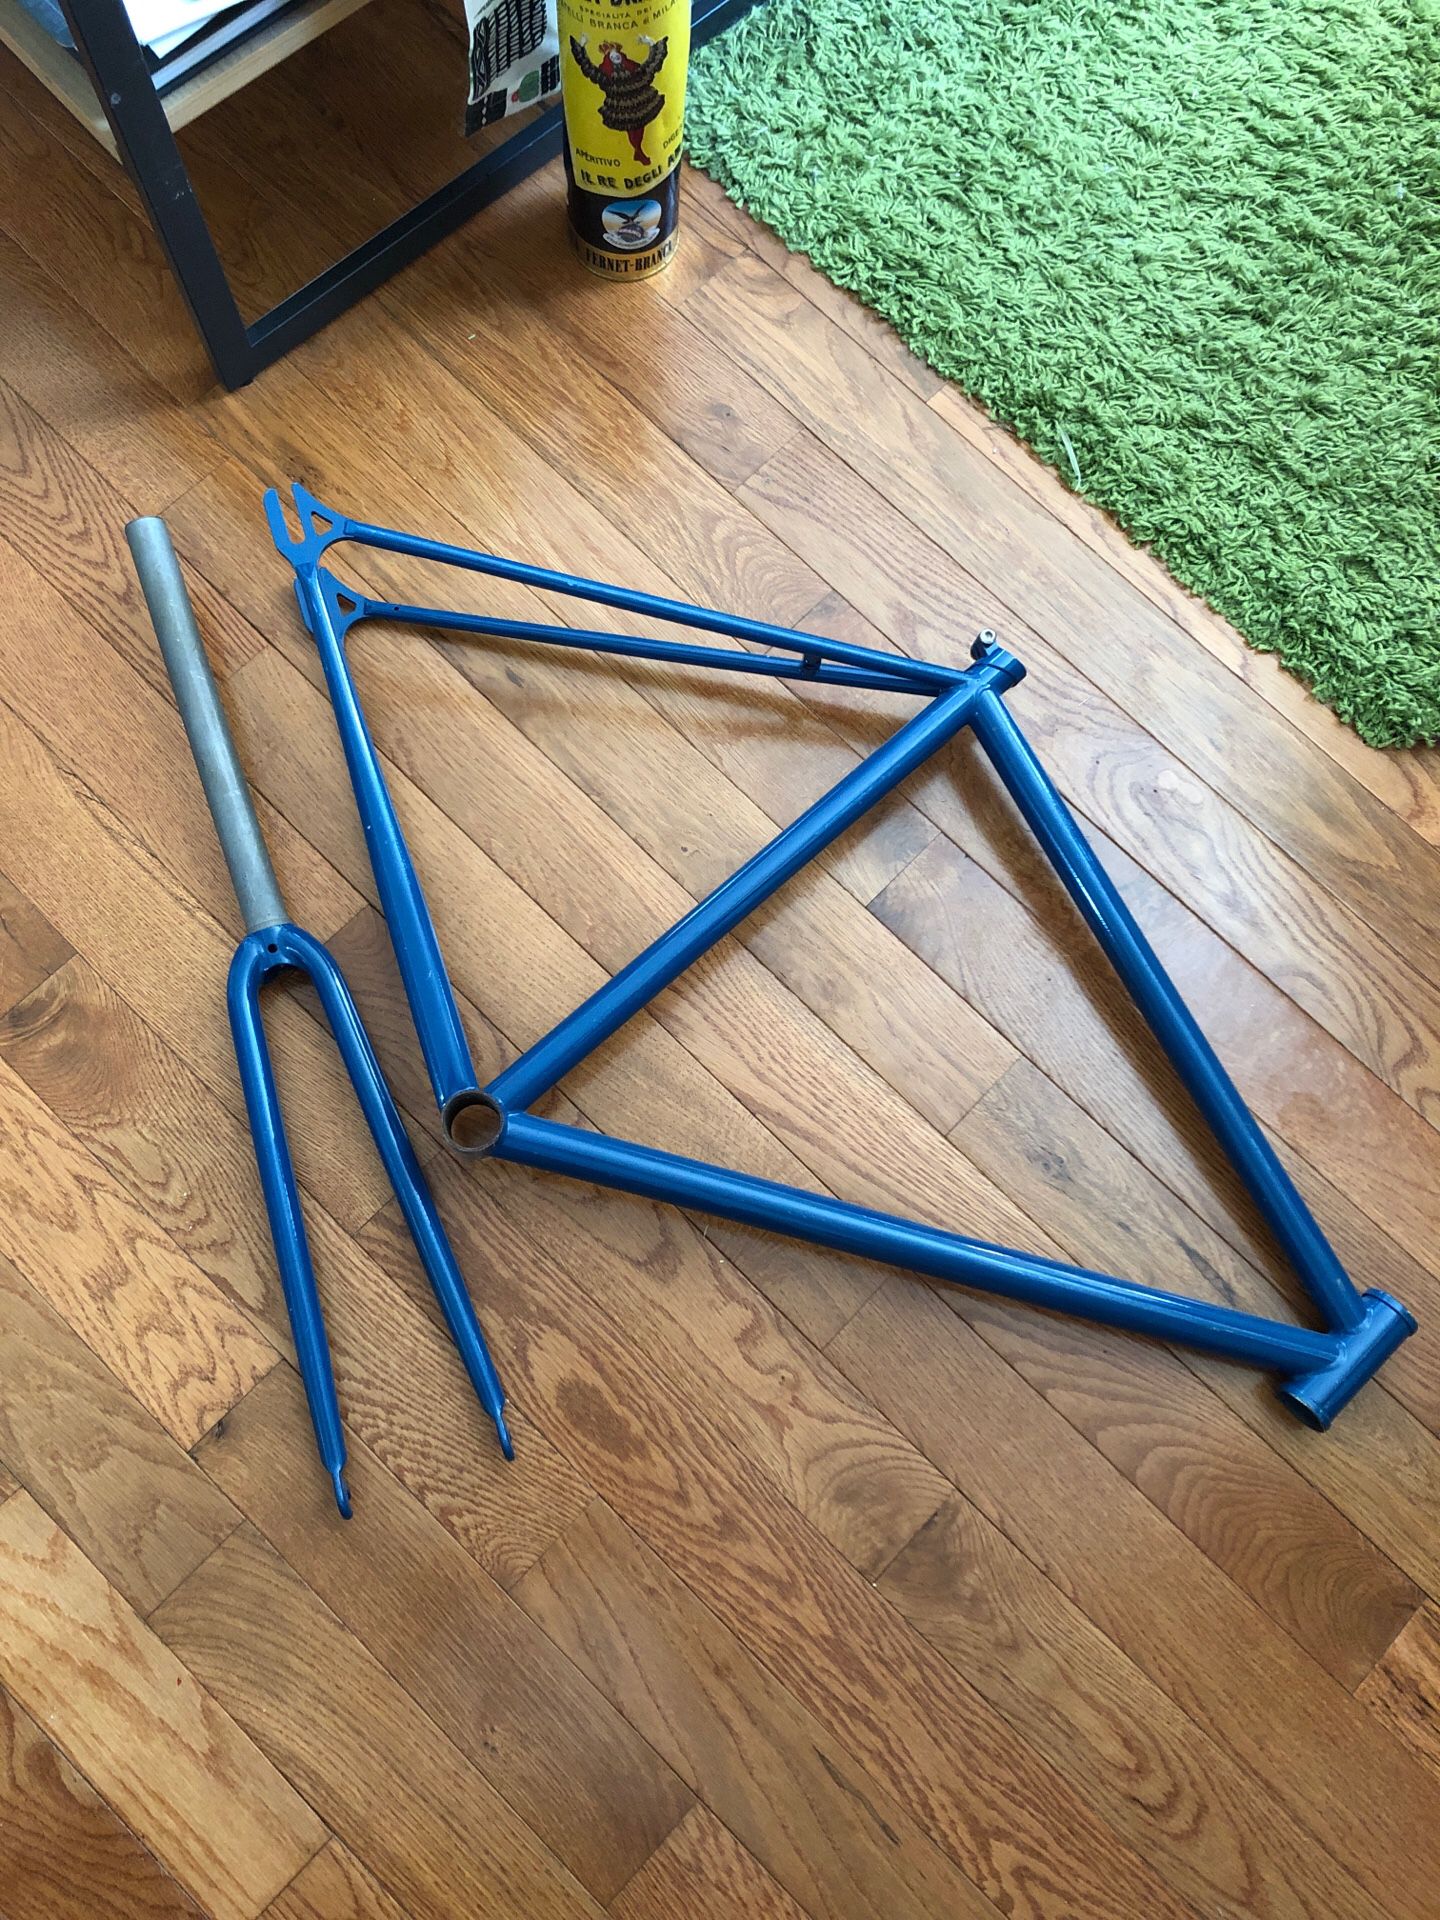 52cm Steel Bike Frame & Matching Fork